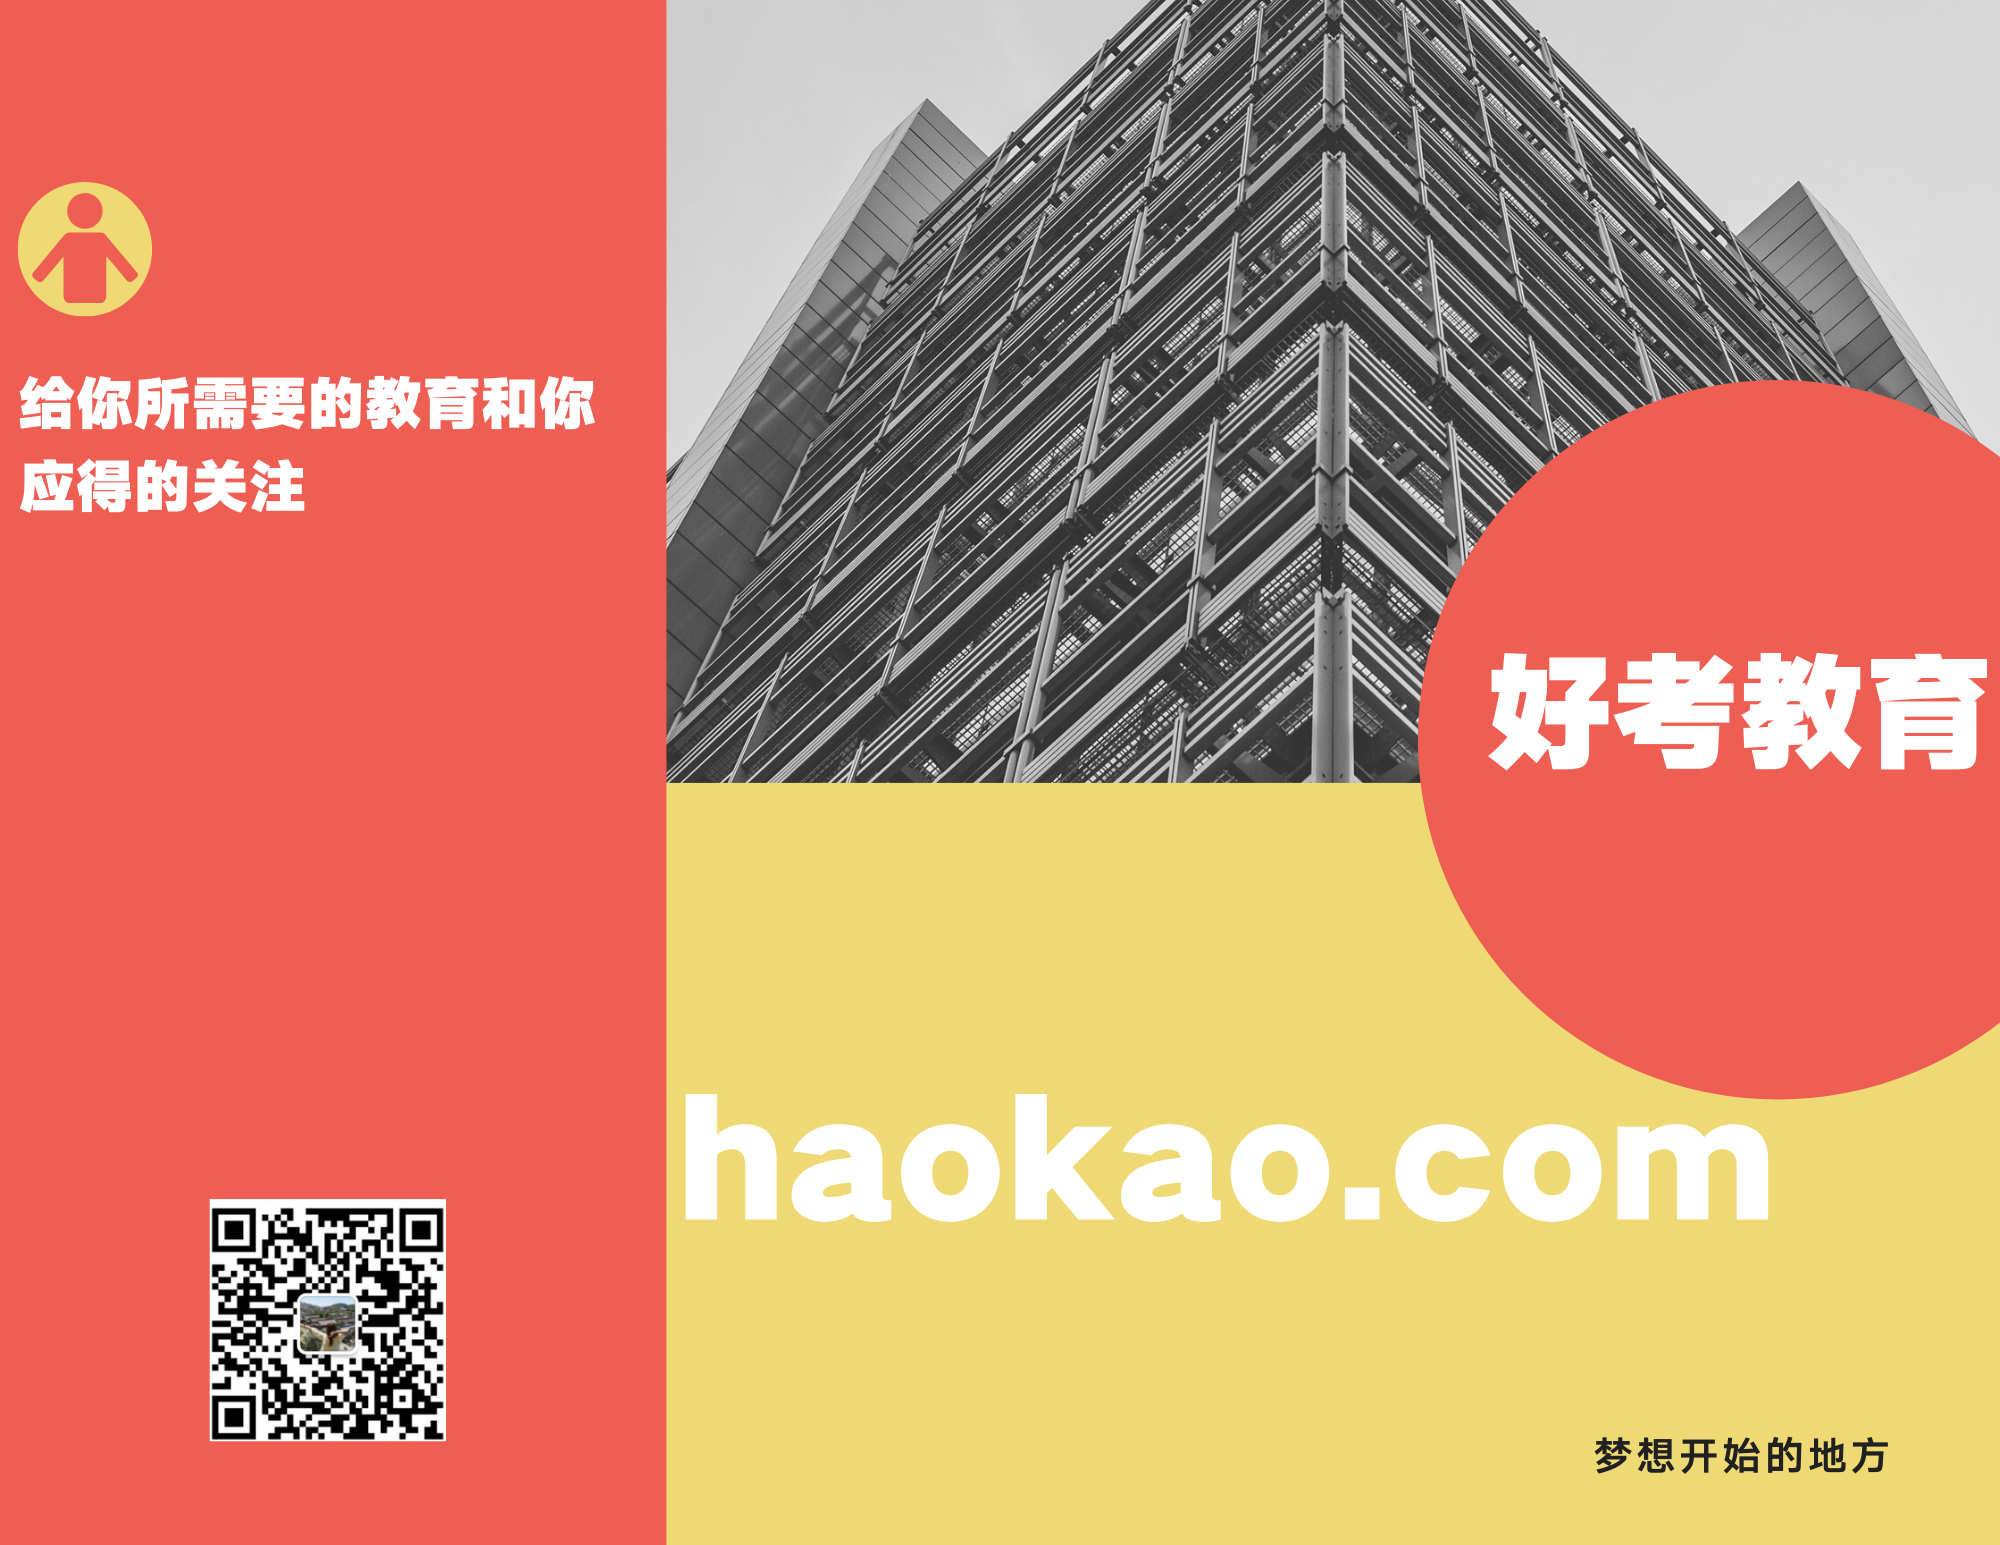 haokao.com